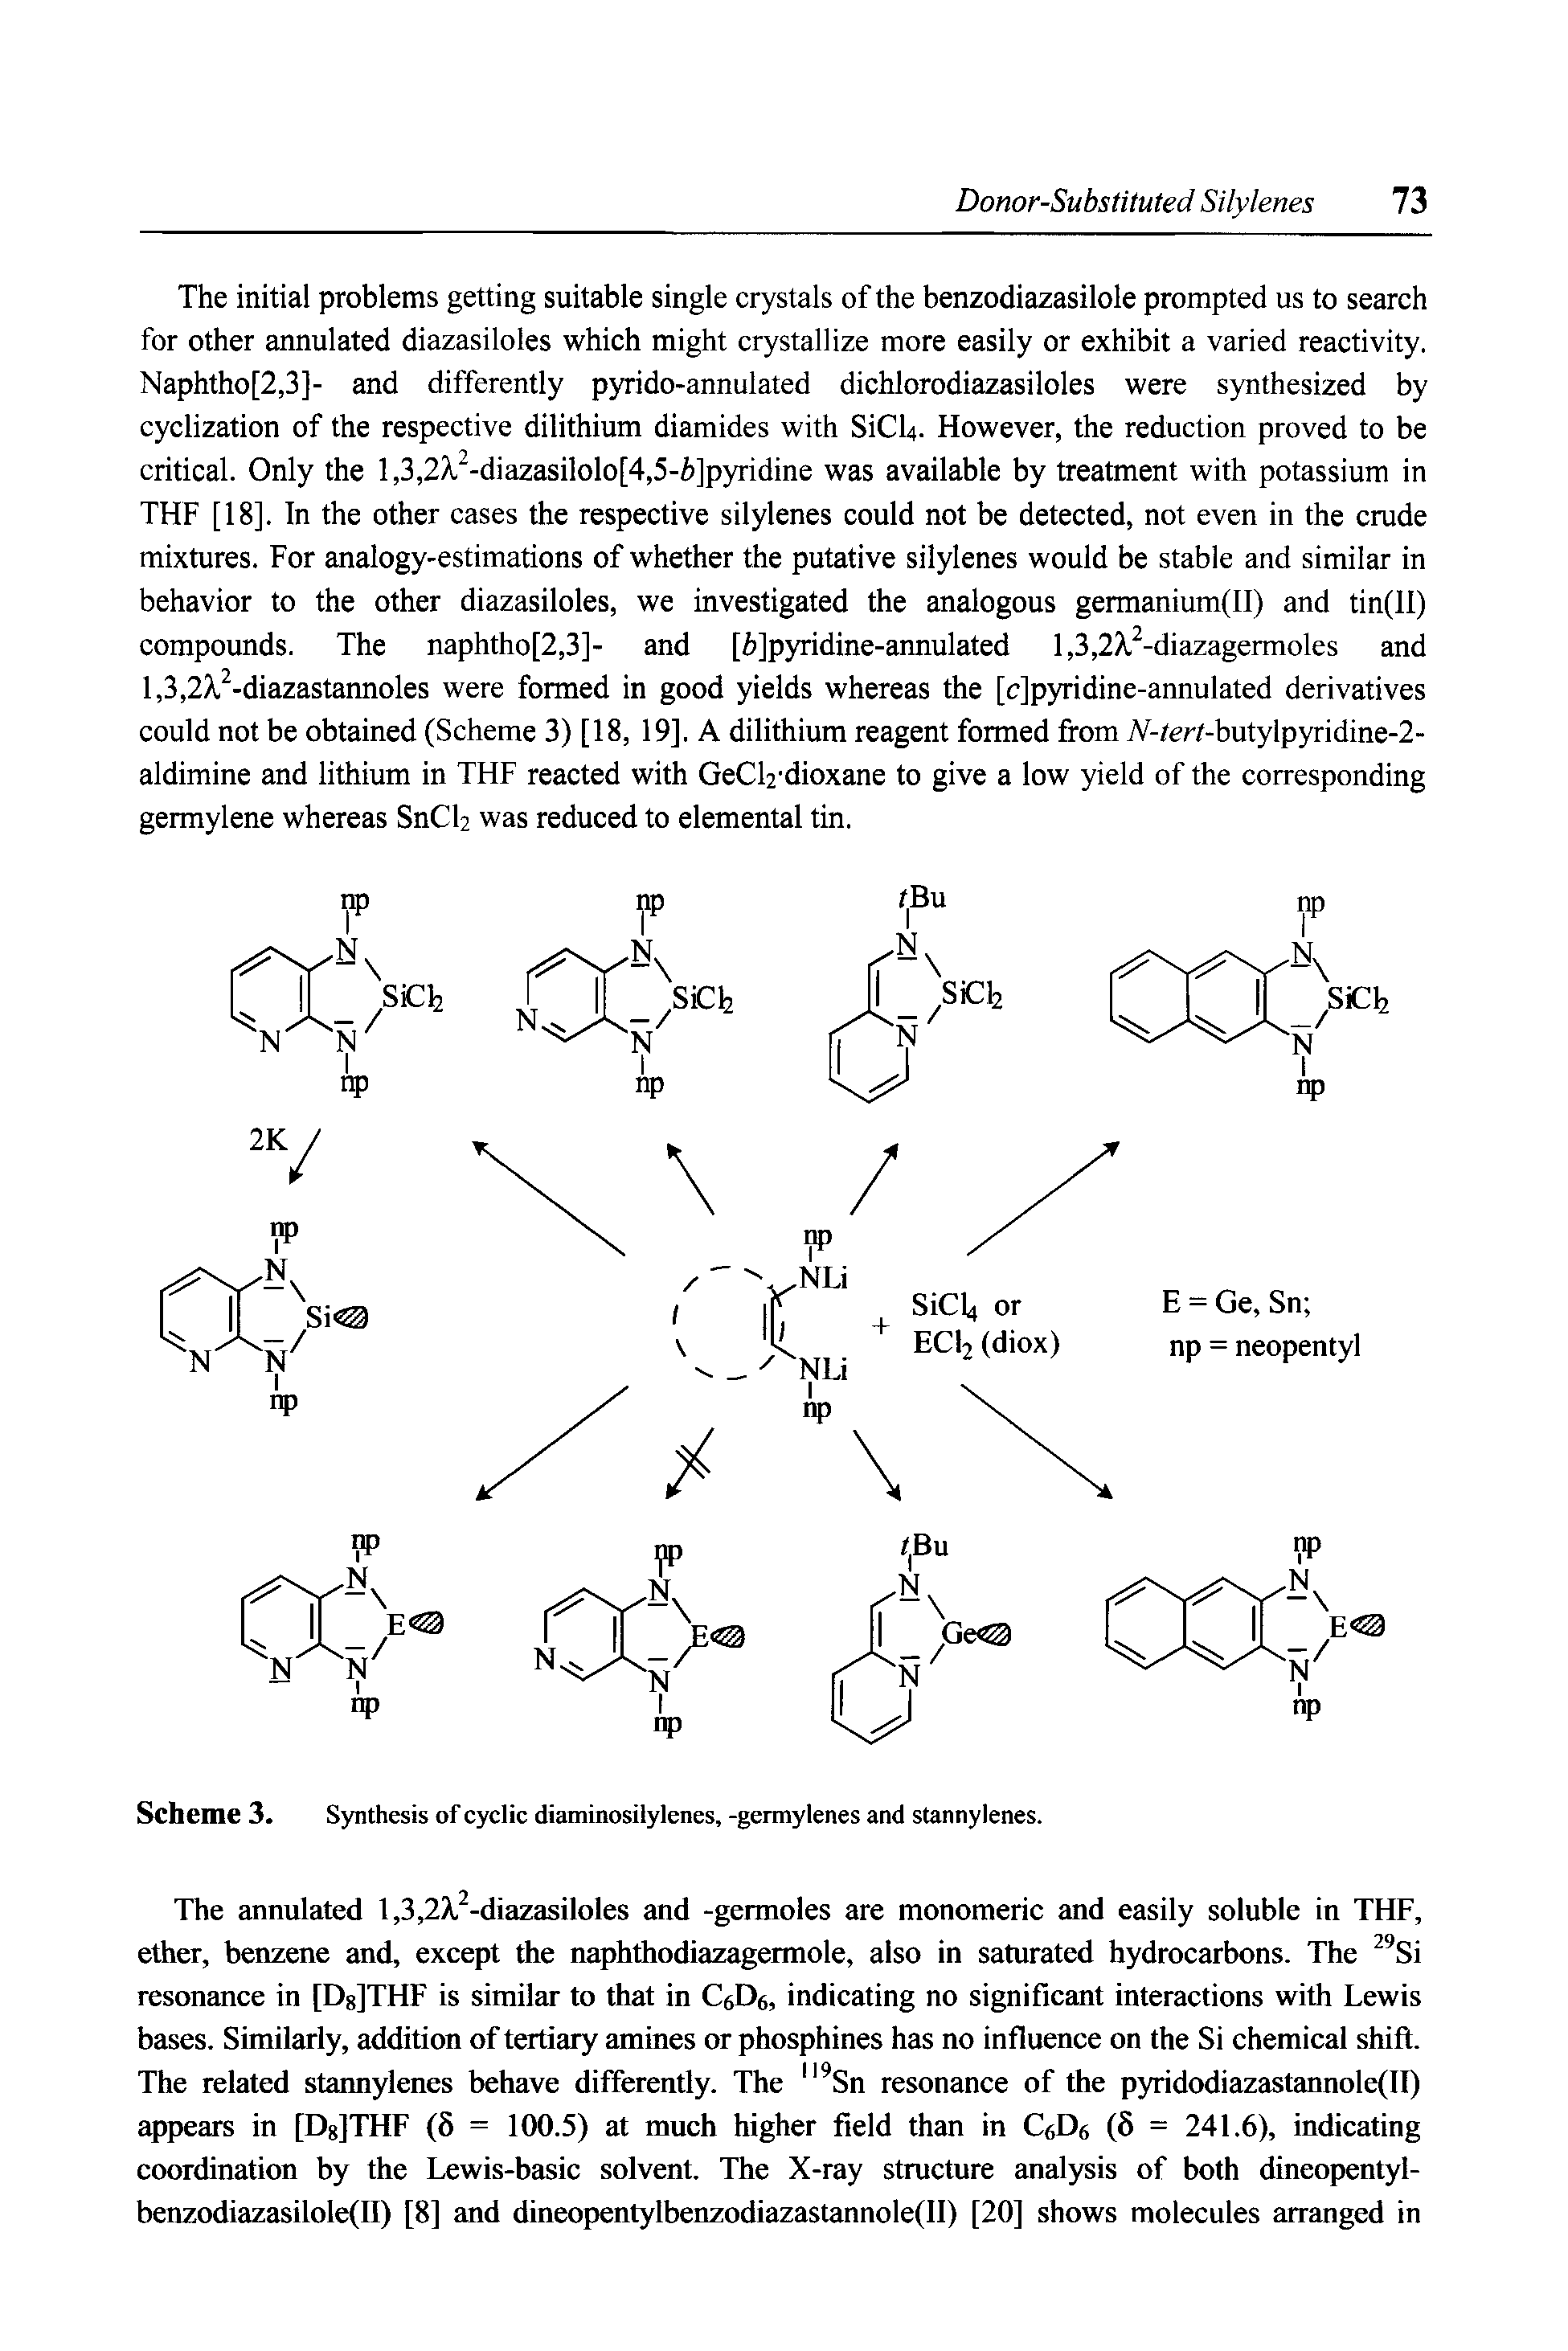 Scheme 3. Synthesis of cyclic diaminosilylenes, -germylenes and stannylenes.